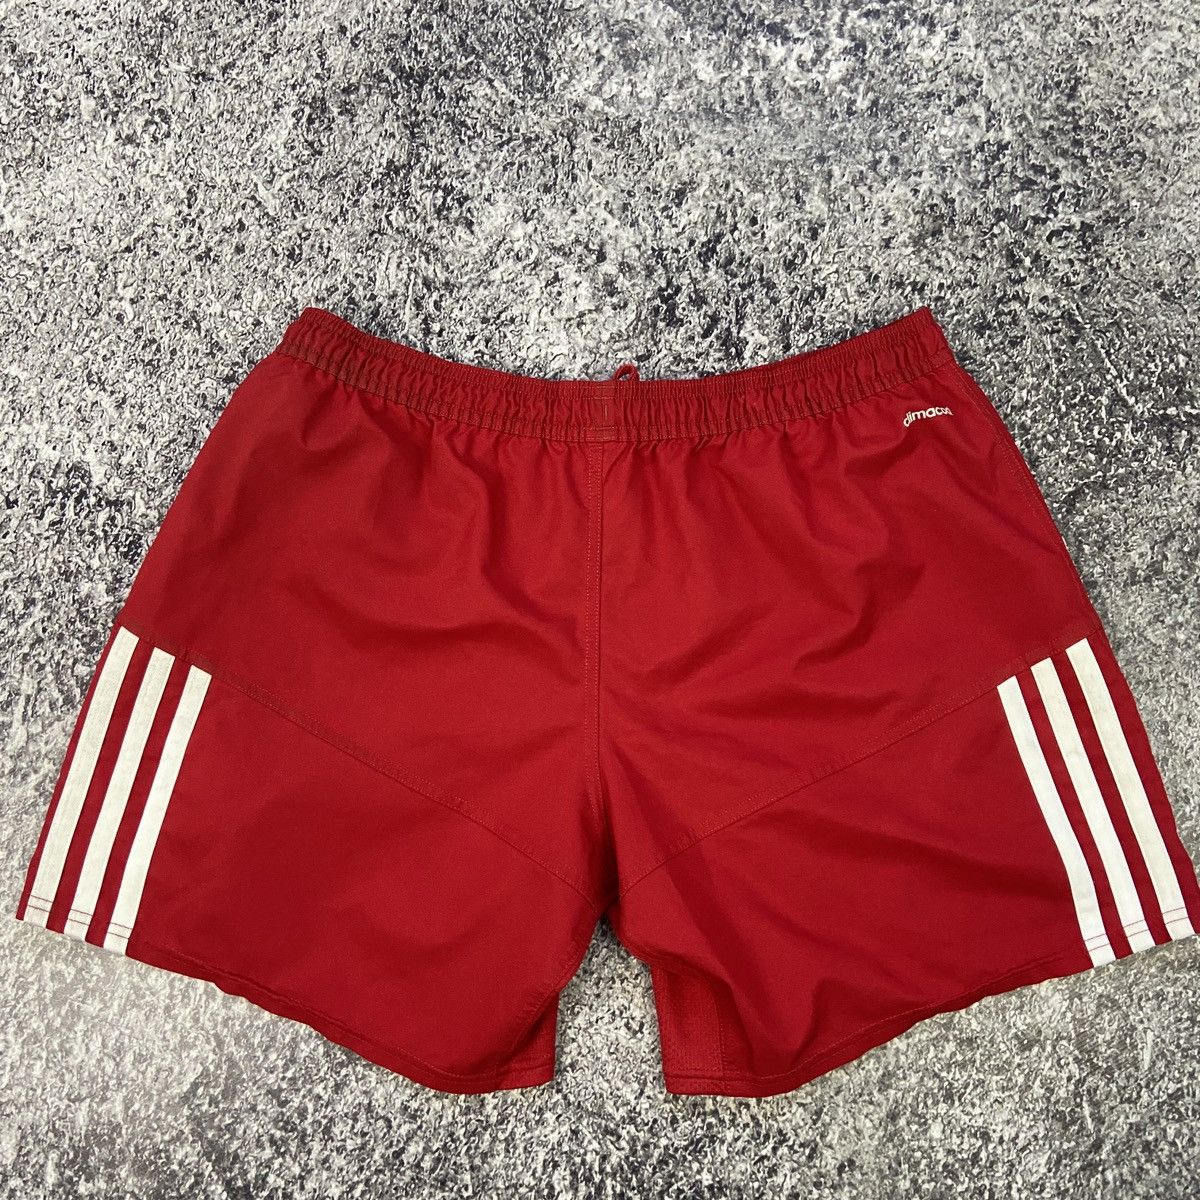 Adidas Man Shorts Adidas Vintage Red White Striped Mini Logo Y2k Size US 40 / EU 56 - 2 Preview